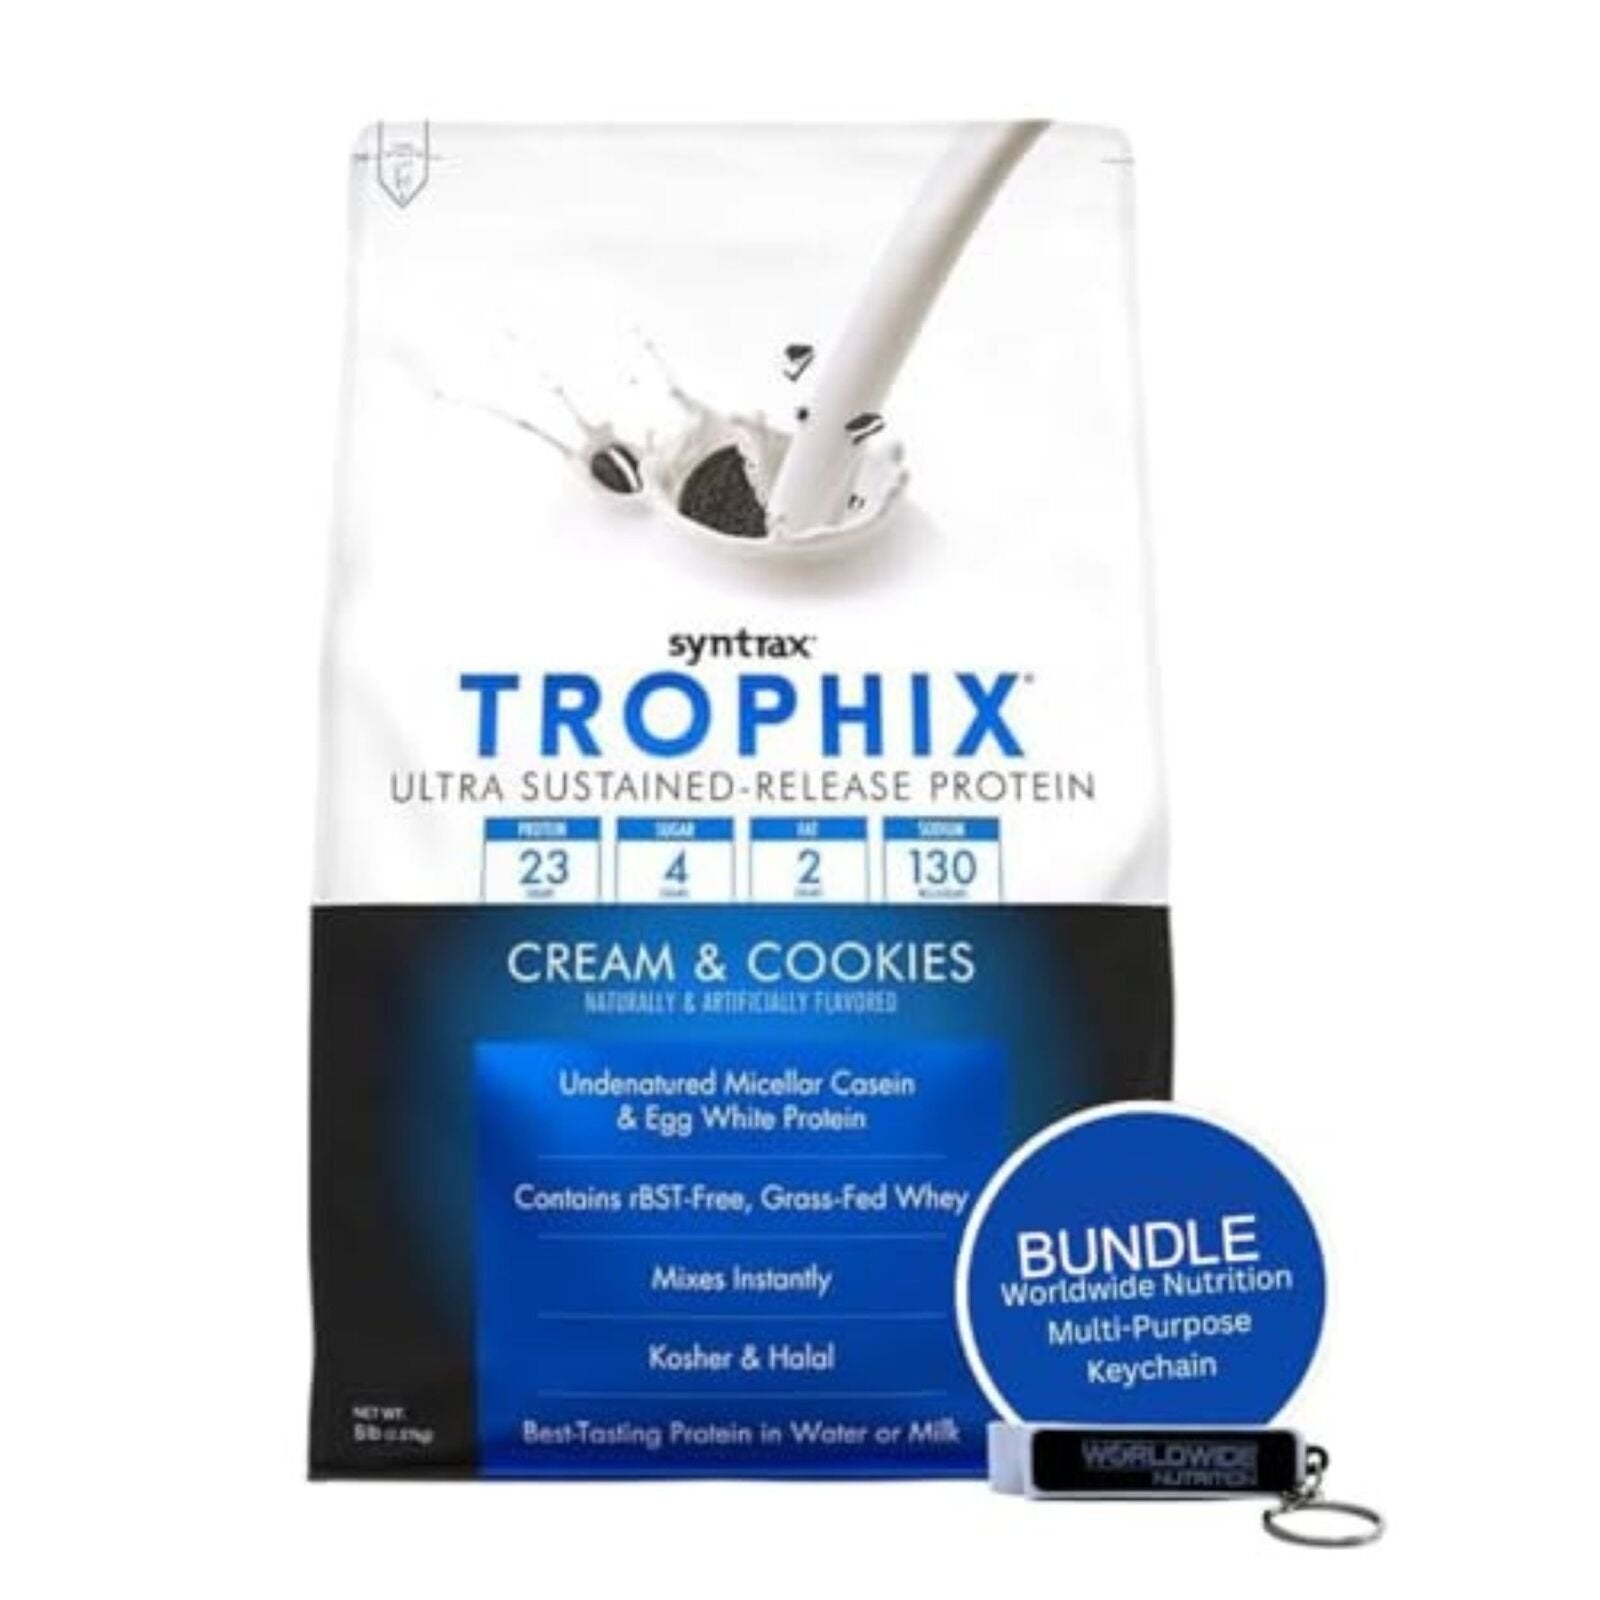 Syntrax Bundle, 2 Items: Trophix Undenatured Casein Protein - Instant Mix Whey Protein & Egg White Protein Powder and Worldwide Nutrition Keychain